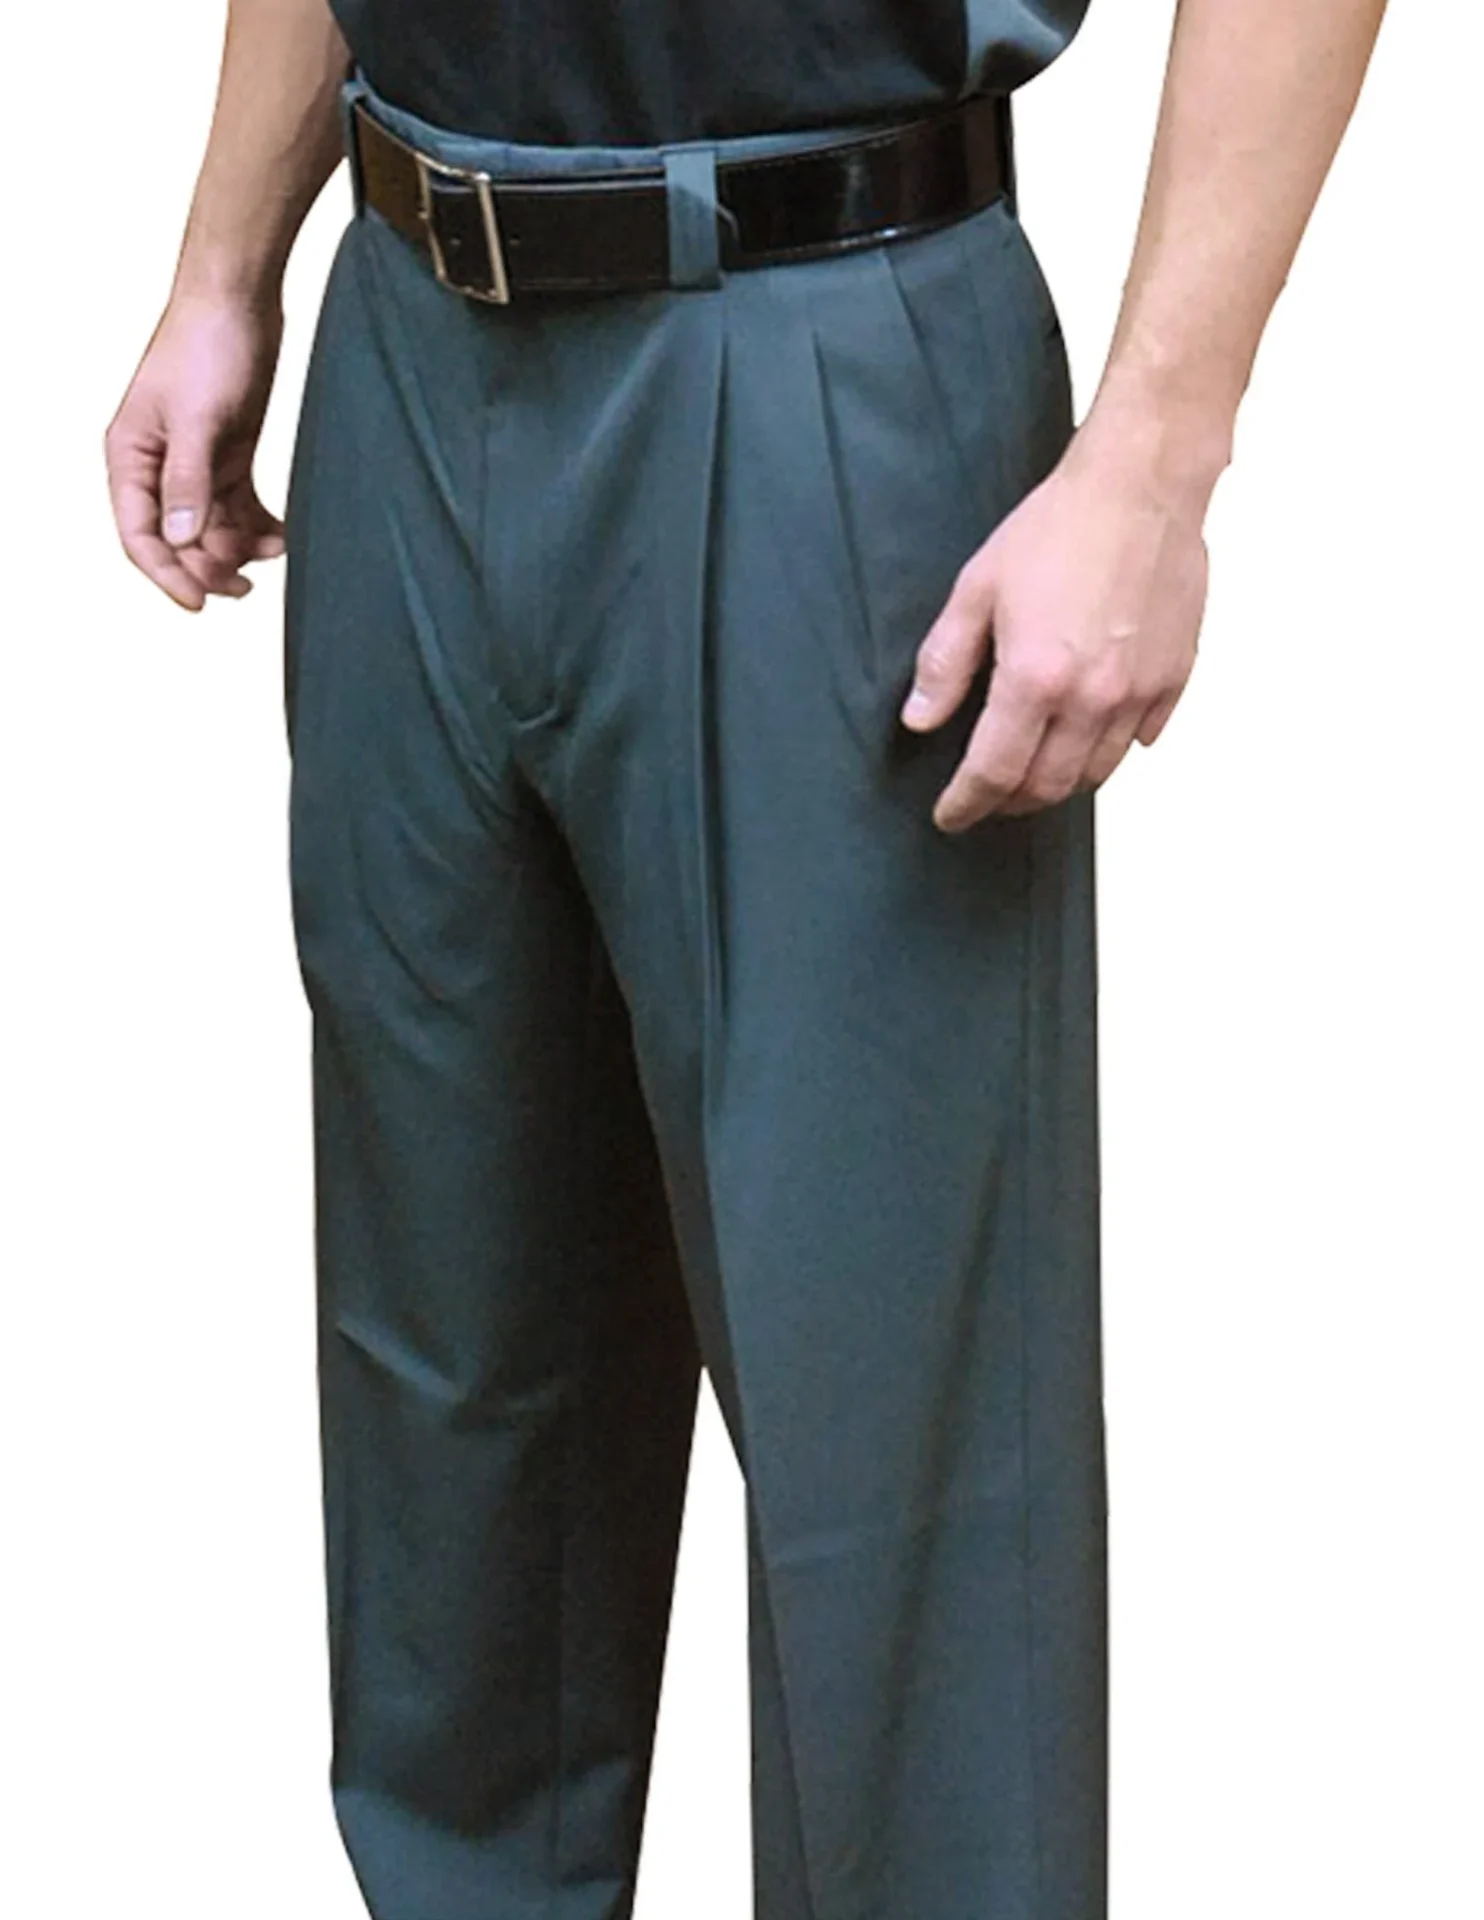 A man wearing green pants and black belt.